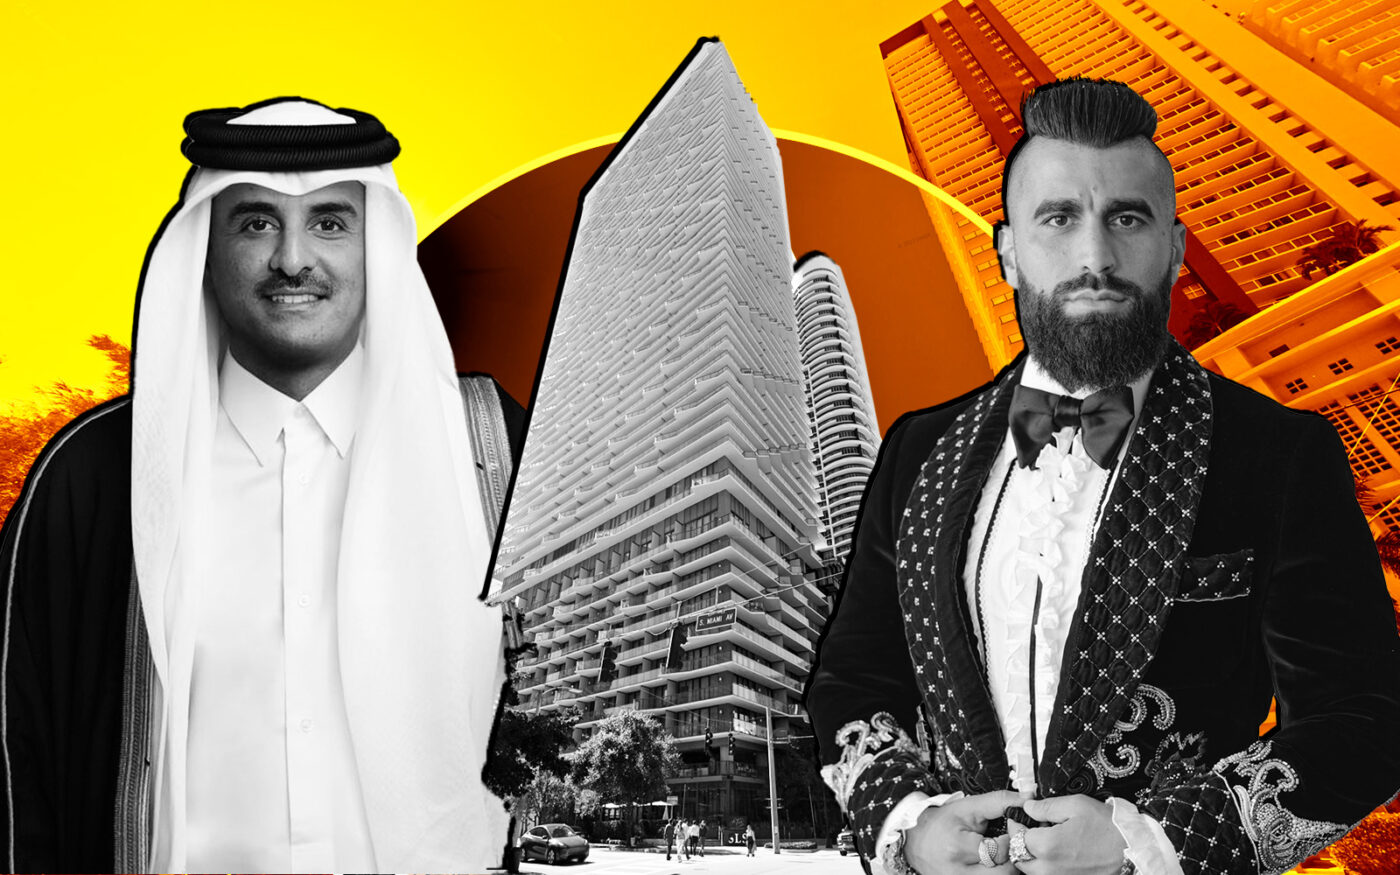 Qatar’s Sheikh Tamim bin Hamad Al Thani and Black Lion Investment's Robert Rivani with the SLS Brickell Miami at 1300 South Miami Avenue